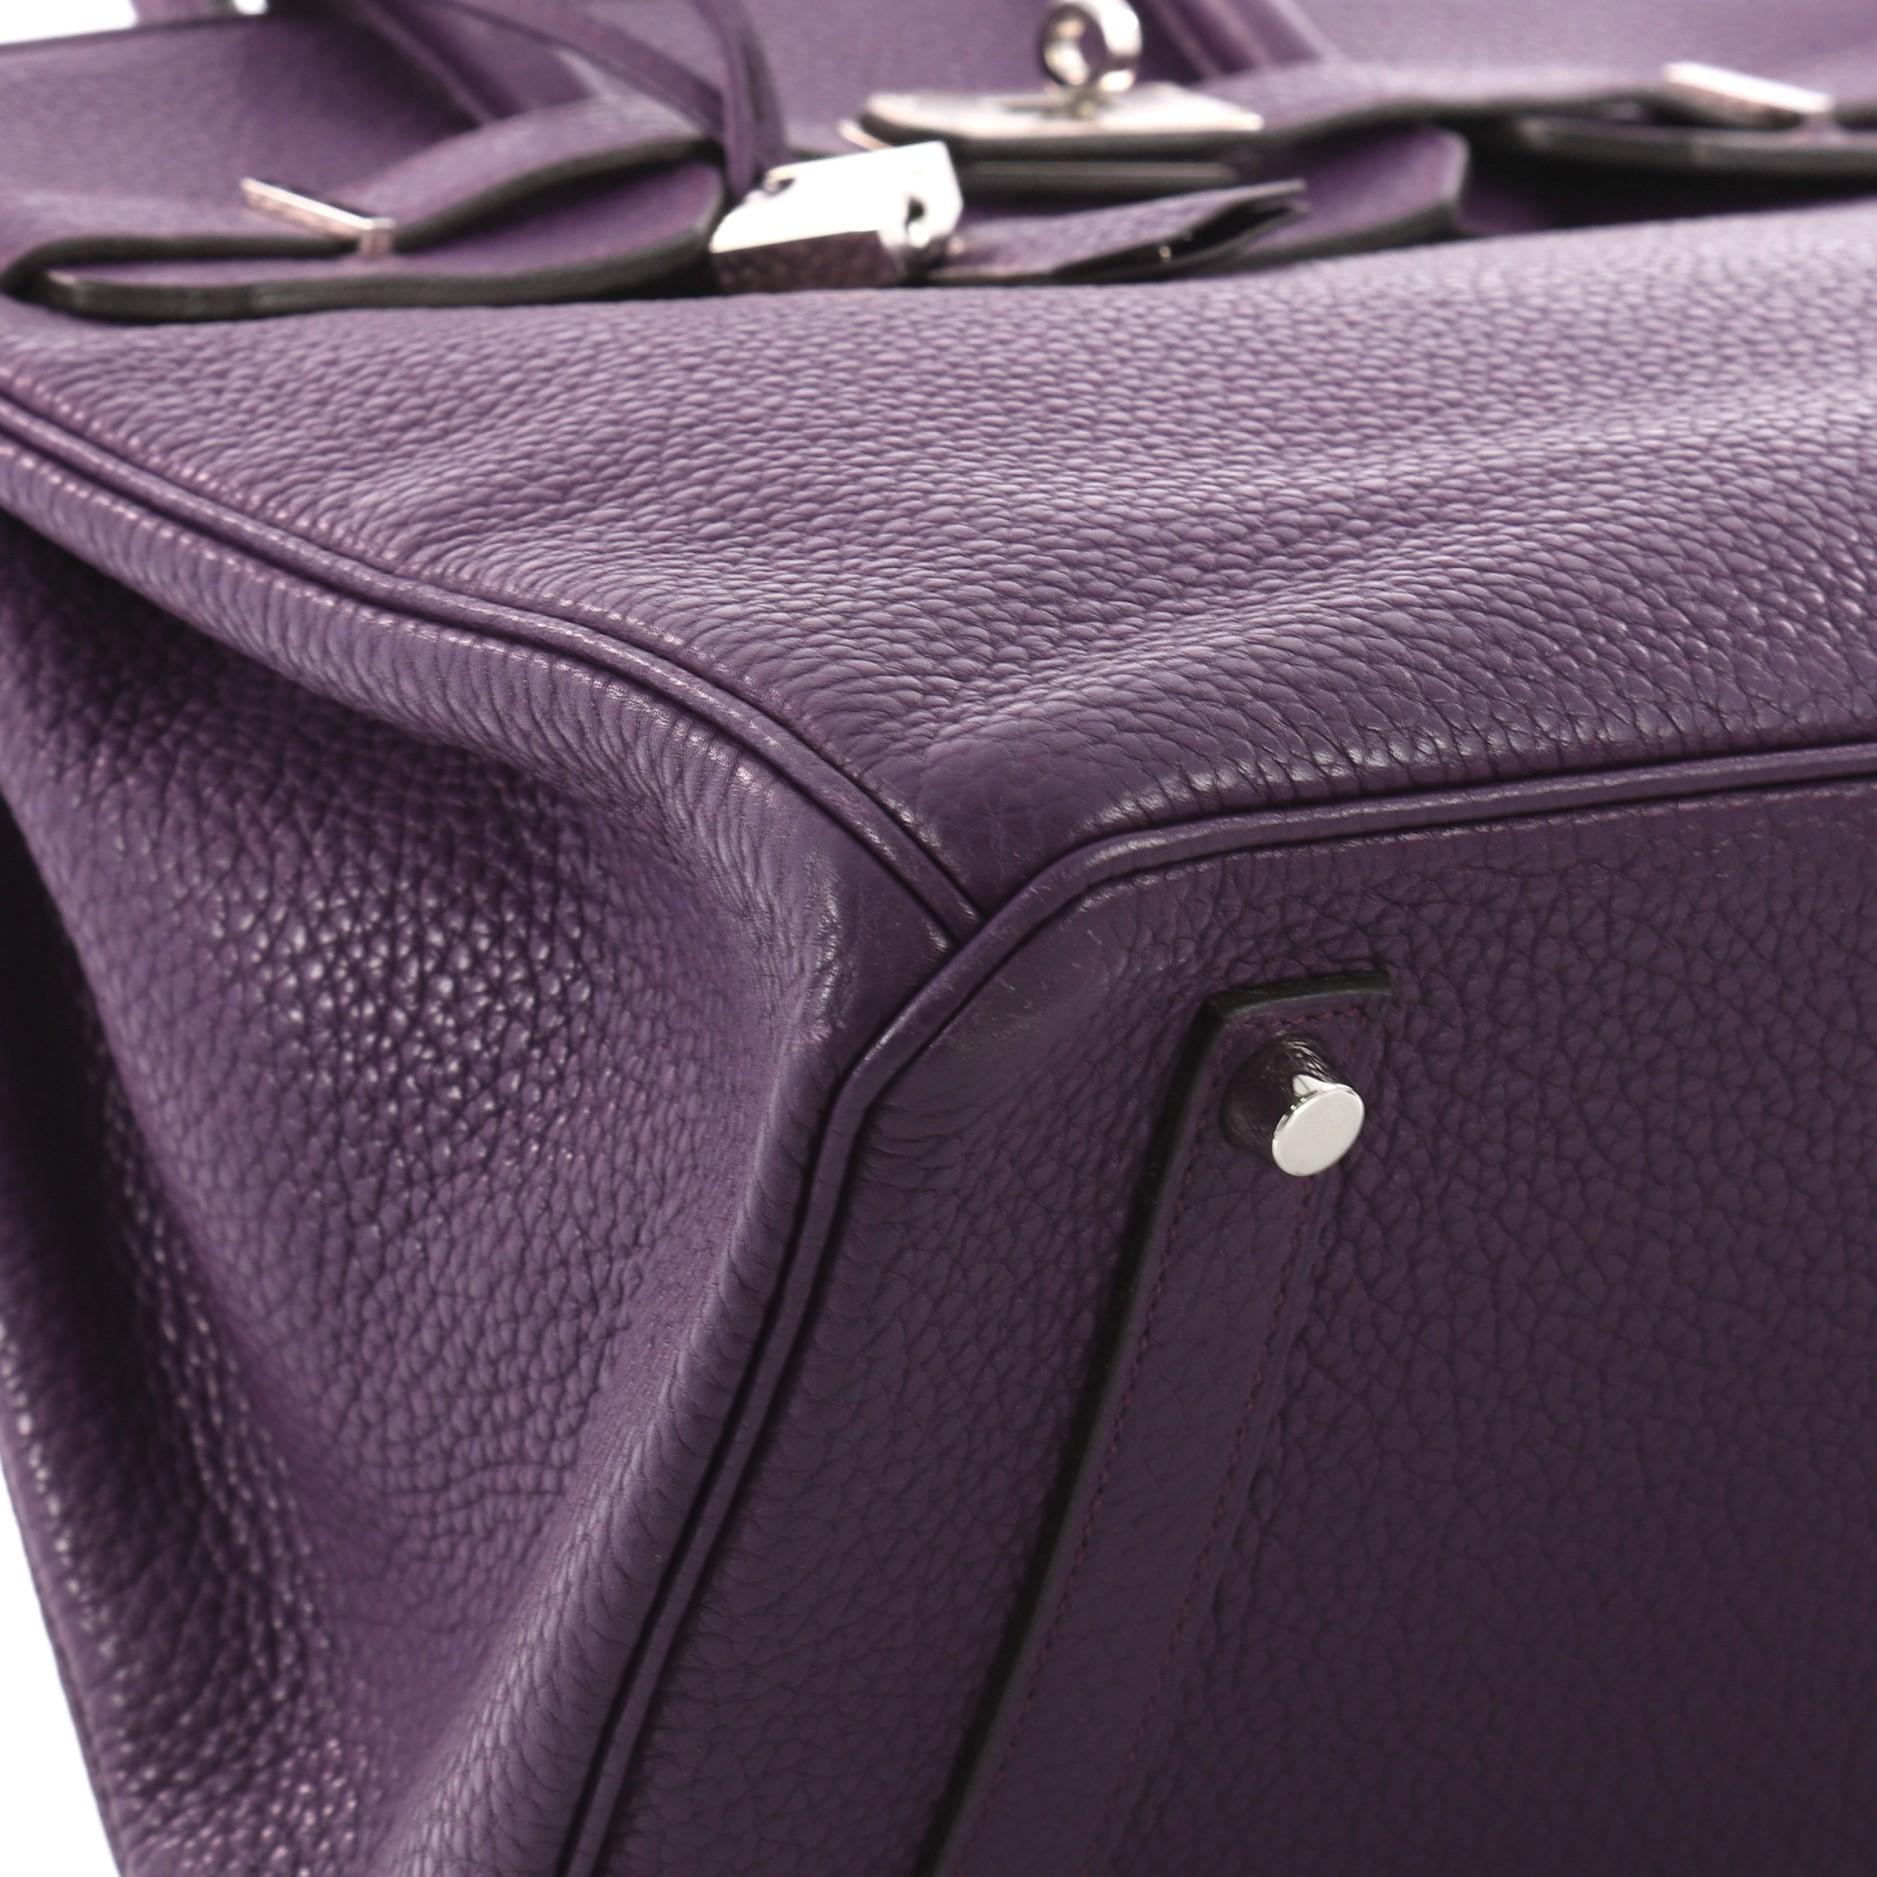 Women's Hermes Birkin Handbag Ultraviolet Purple Clemence with Palladium Hardware 35 